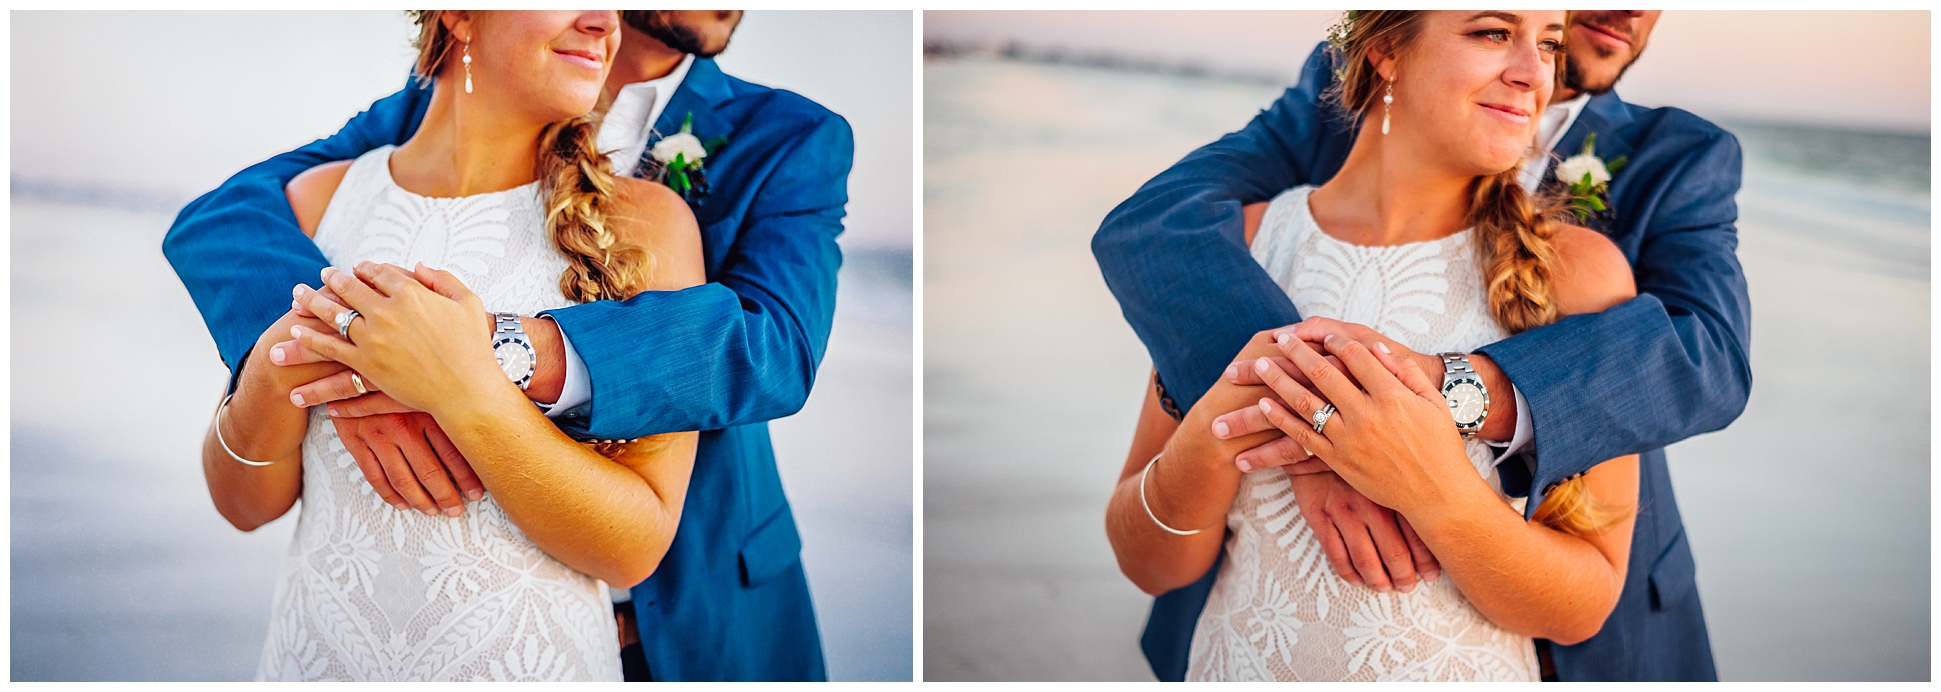 medium-format-film-vs-digital-wedding-photography-florida-beach_0023.jpg